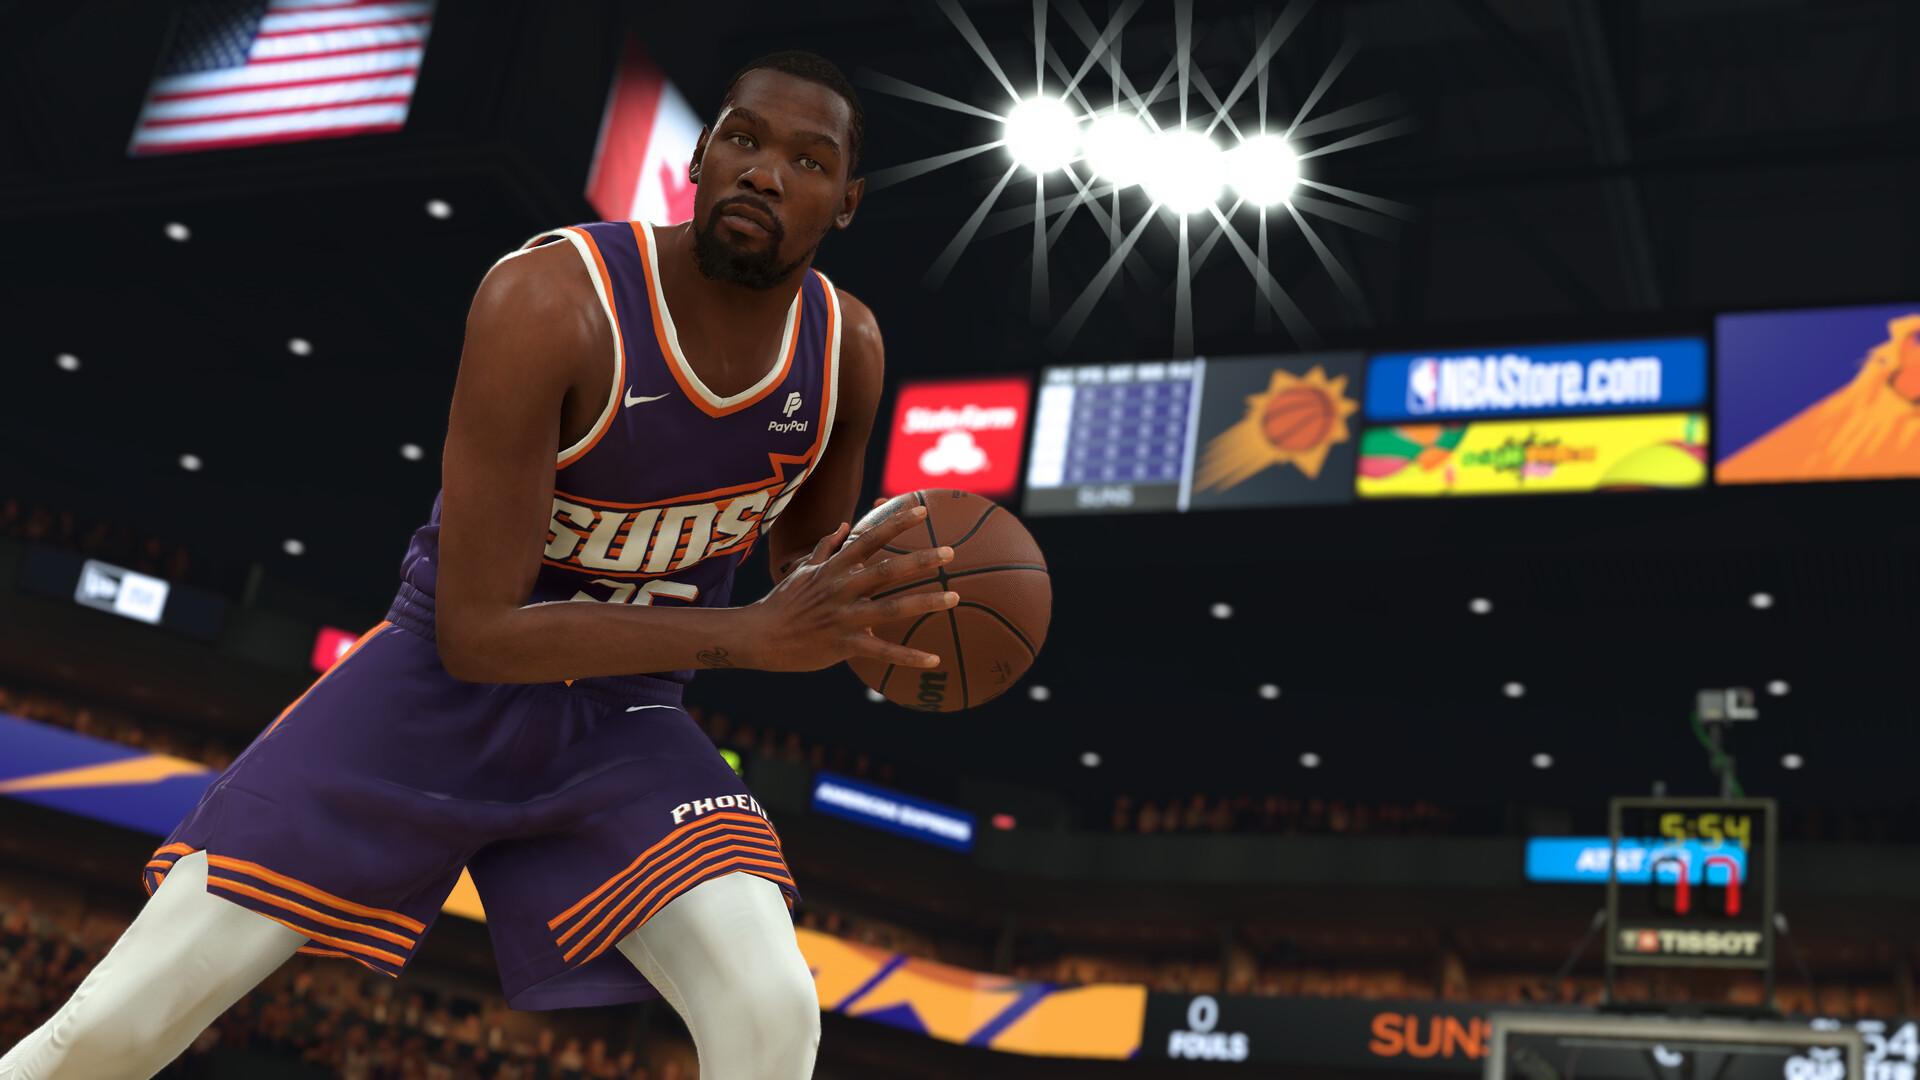 Screenshot №5 from game NBA 2K24